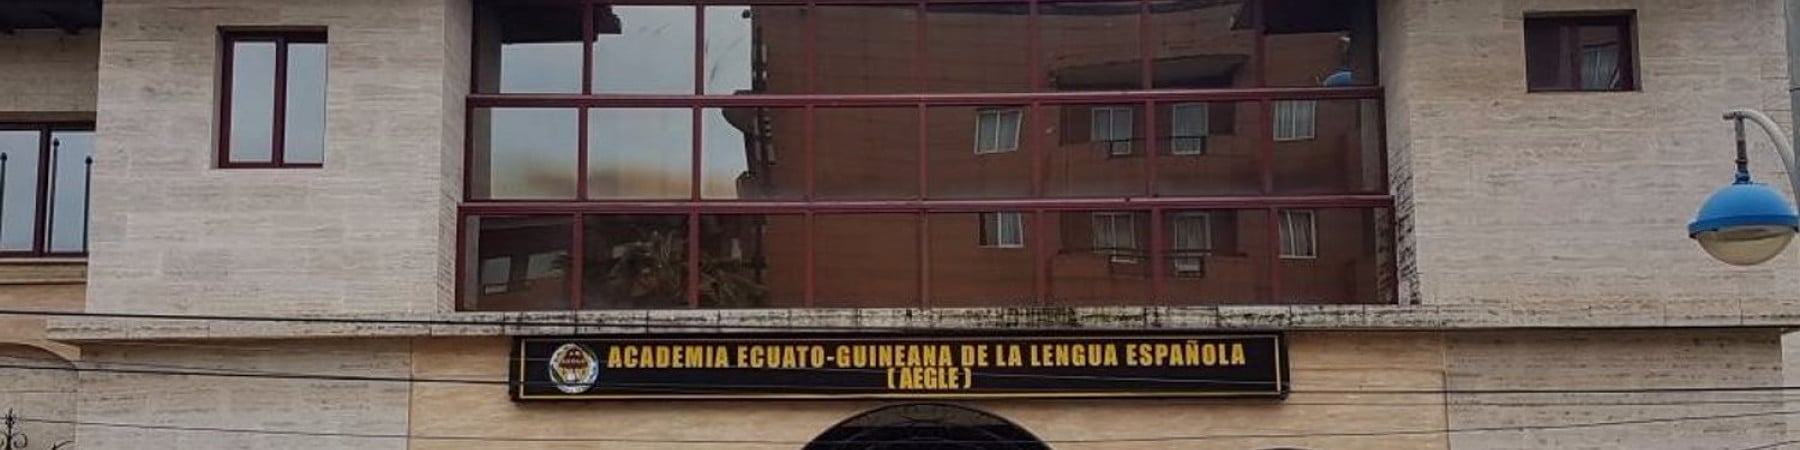 Fachada de la Academia Ecuatoguineana de la Lengua